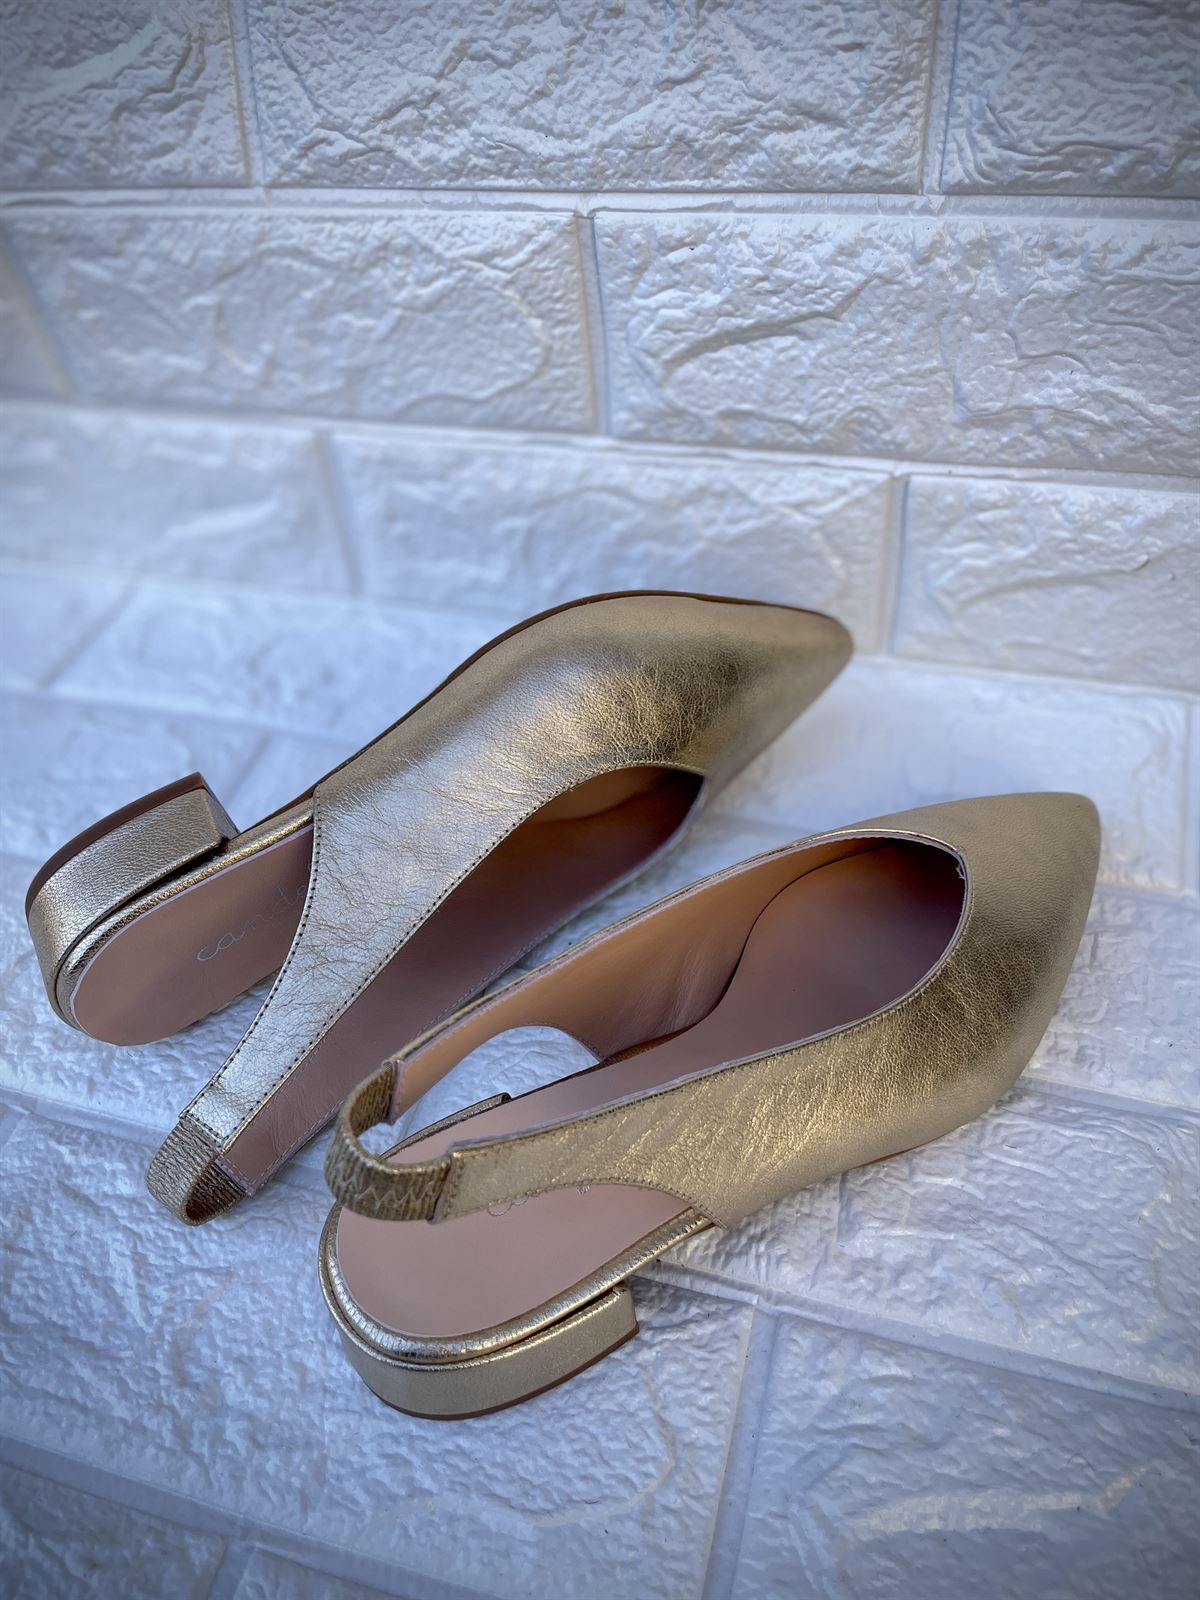 Baailarina zapato Candelitas metalizado champagne - Imagen 1